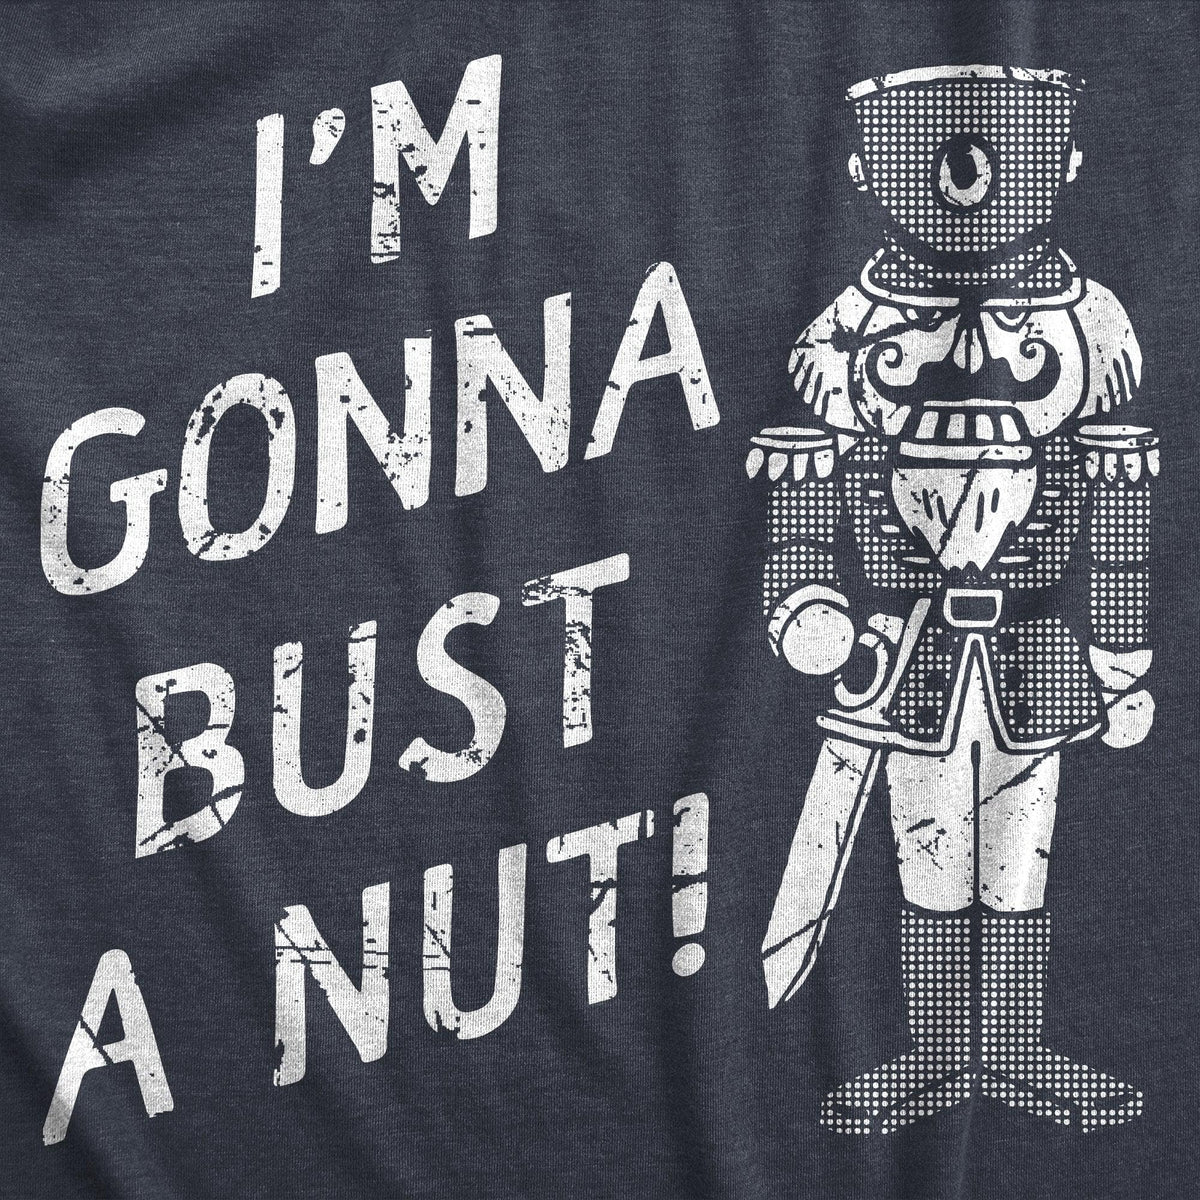 Im Gonna Bust A Nut Men&#39;s Tshirt  -  Crazy Dog T-Shirts